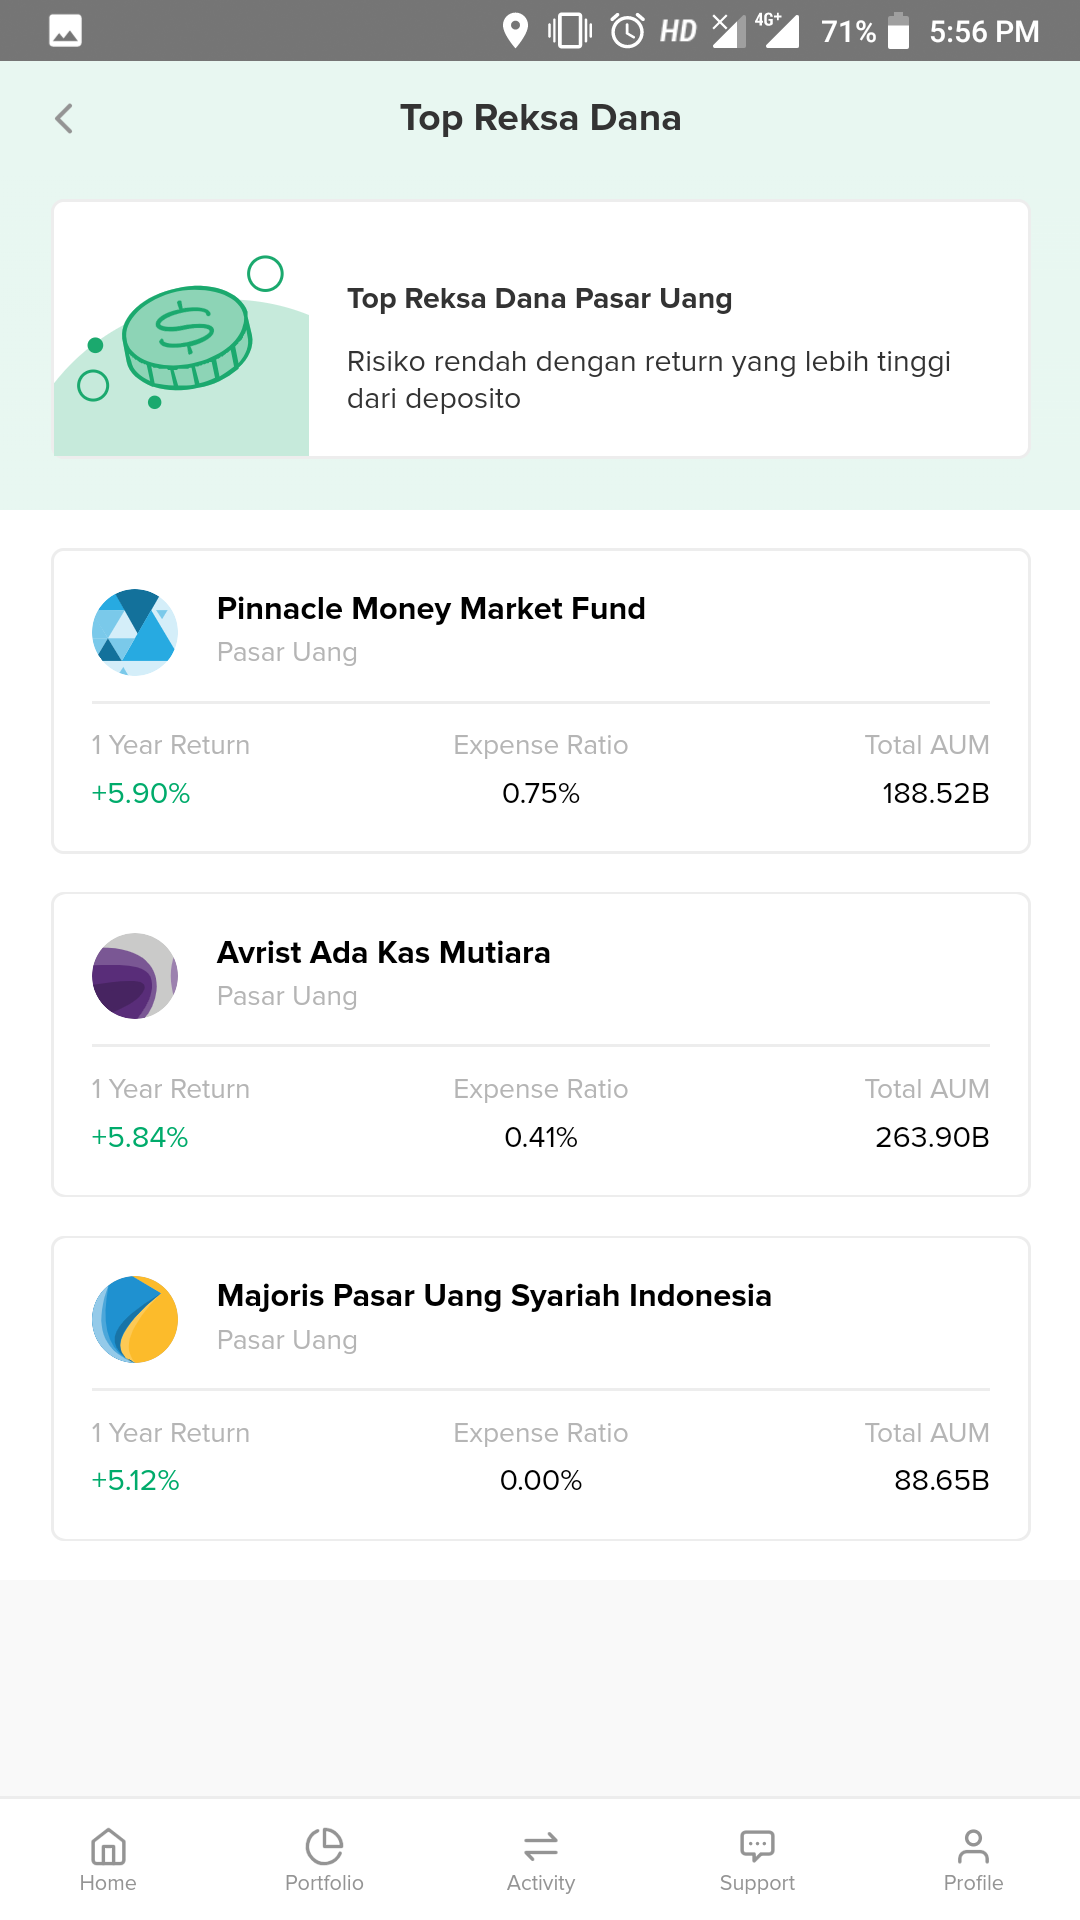 Bibit stockbit Indonesia's trader